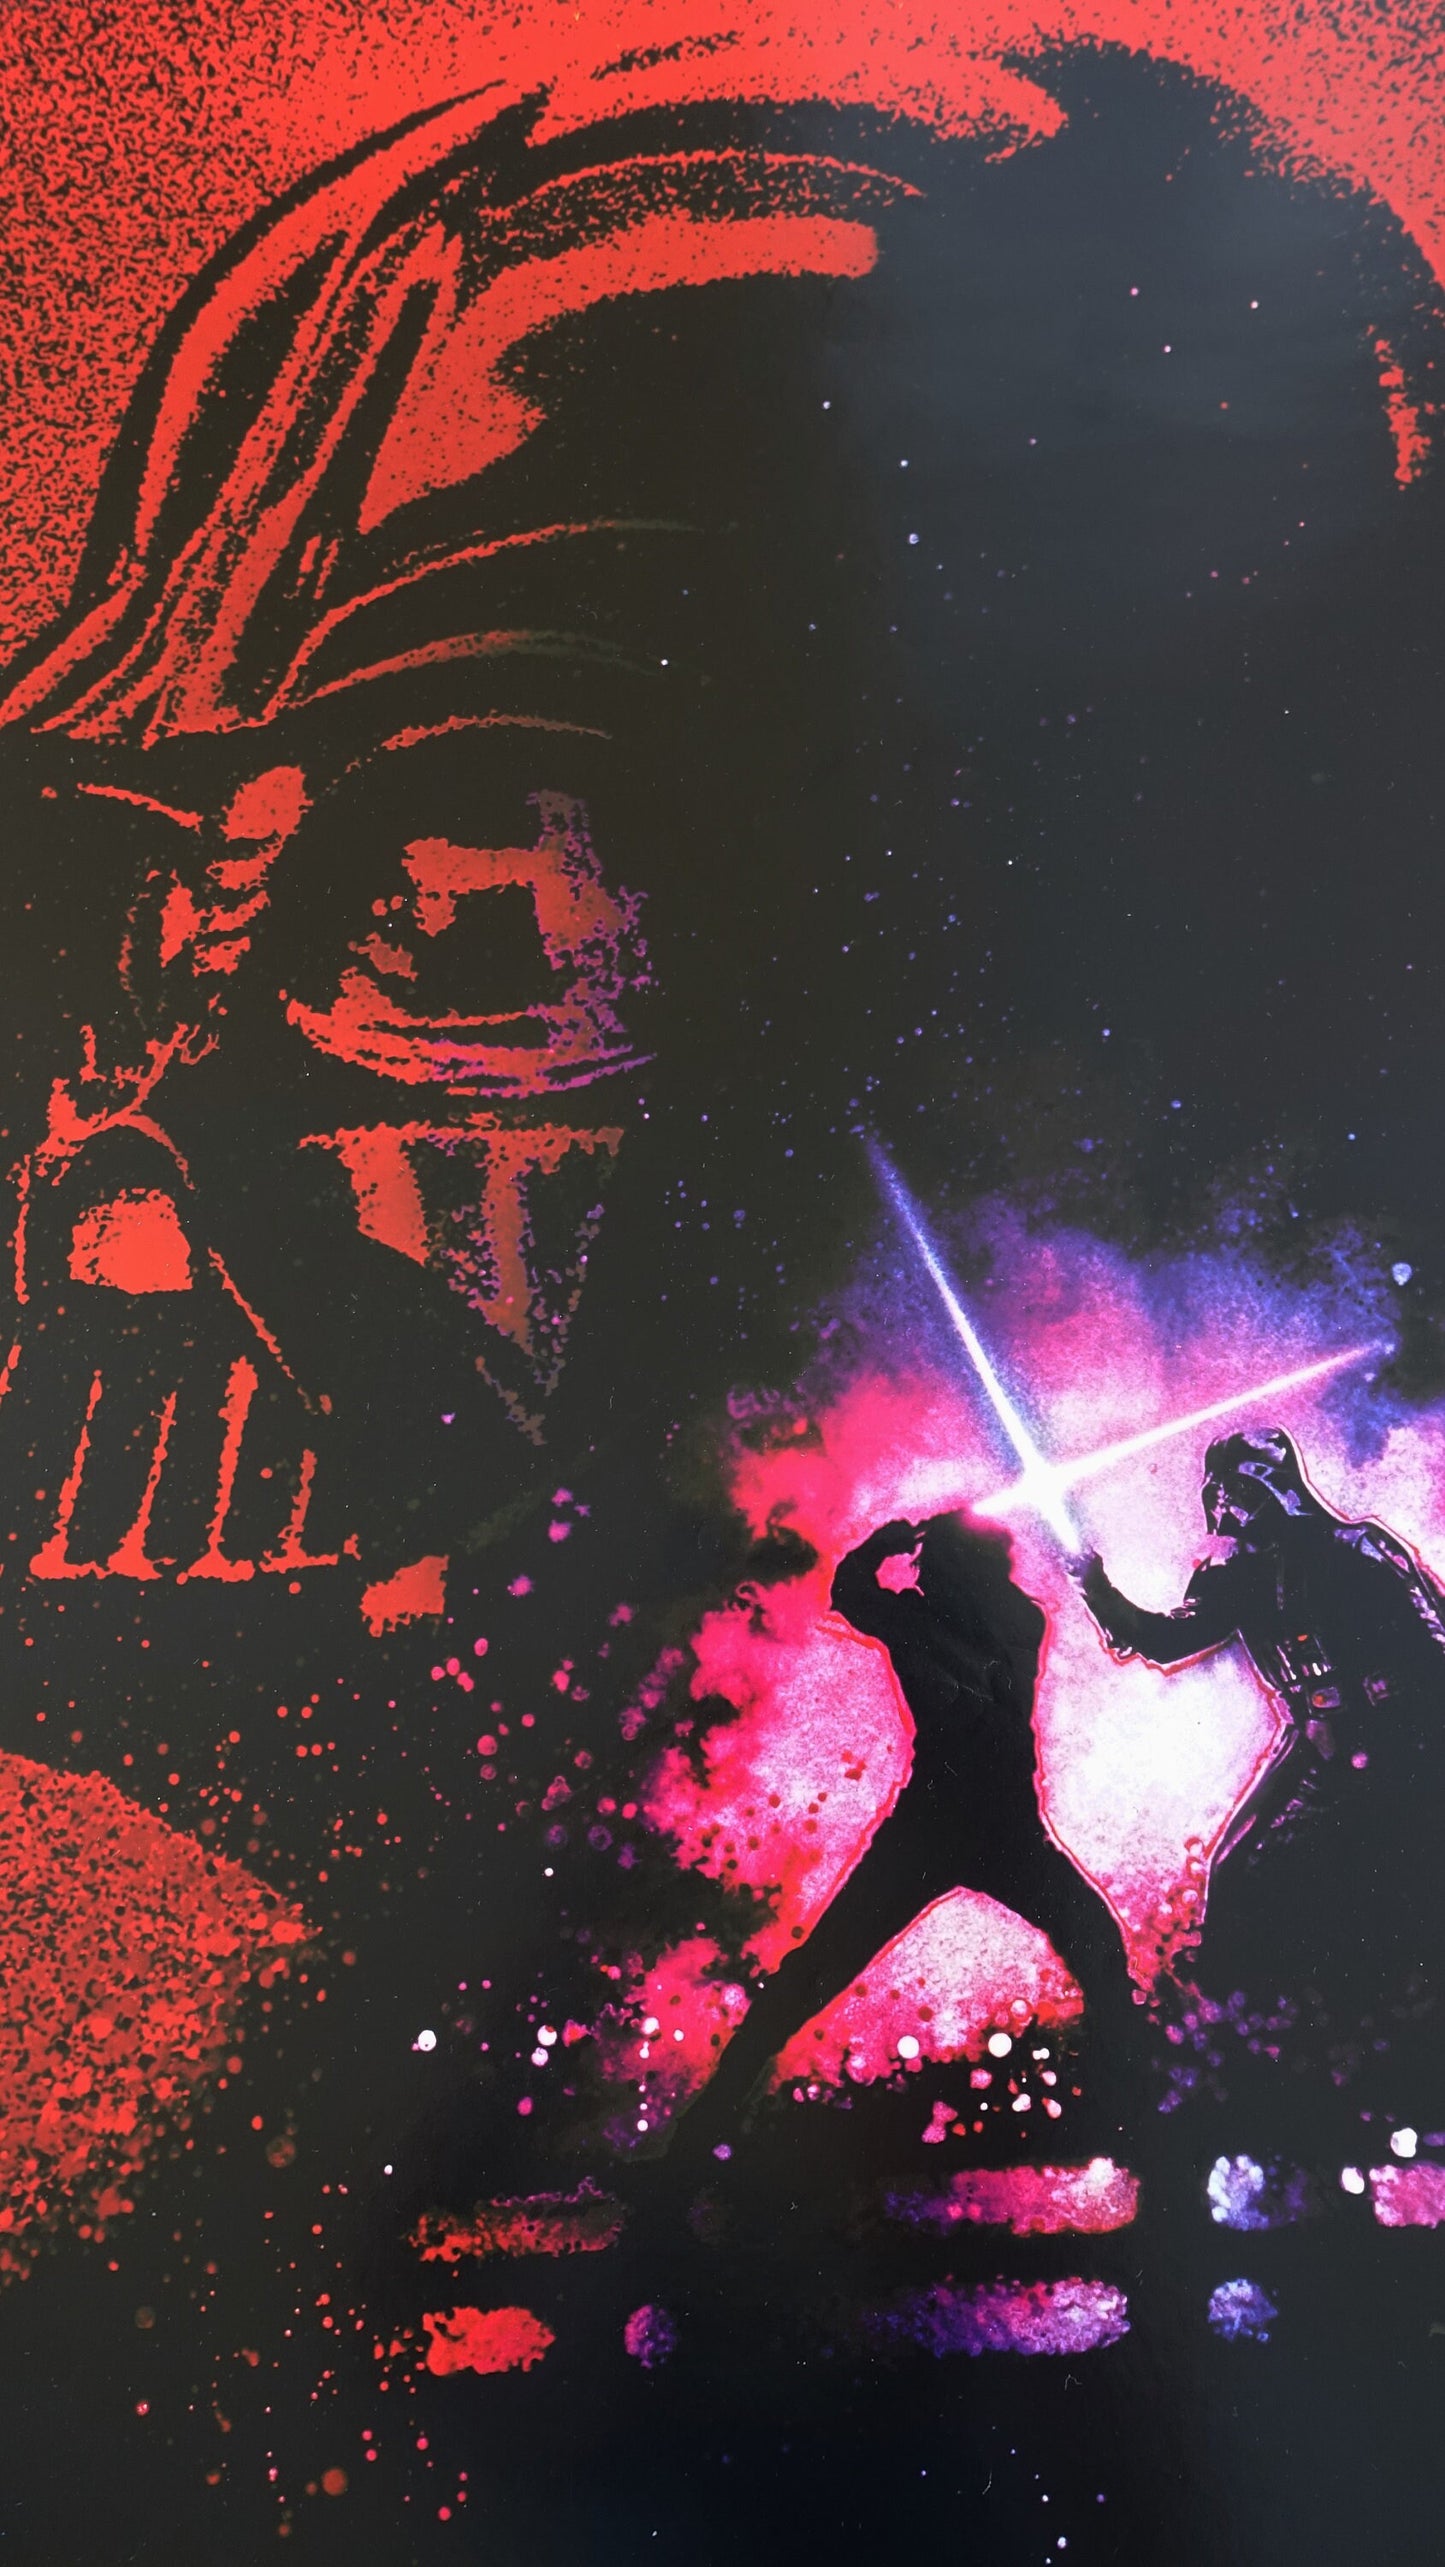 1983 Star Wars "Return of the Jedi" Movie Poster - Original Vintage Poster